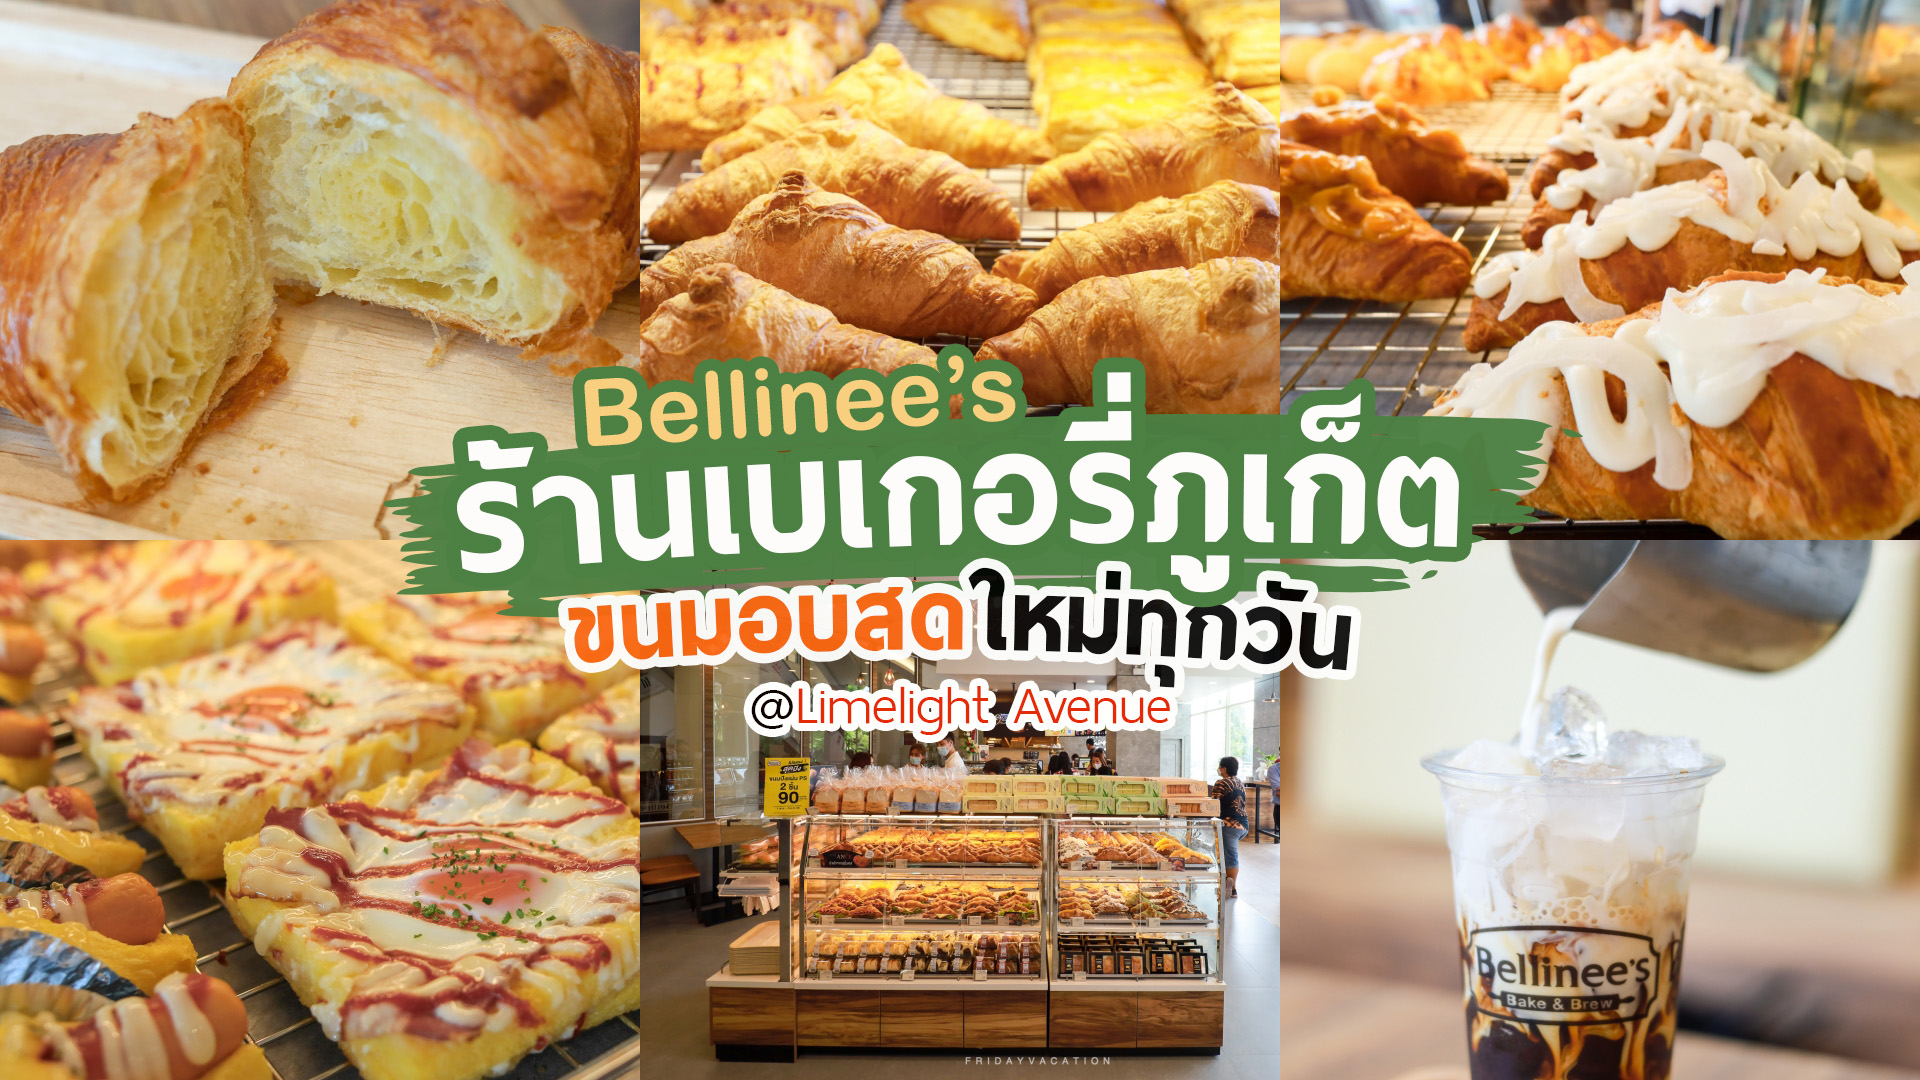 Bellinee's Phuket ร้านเบเกอรี่ภูเก็ต ขนมอบสดใหม่ทุกวัน Bellinee's bake & brew